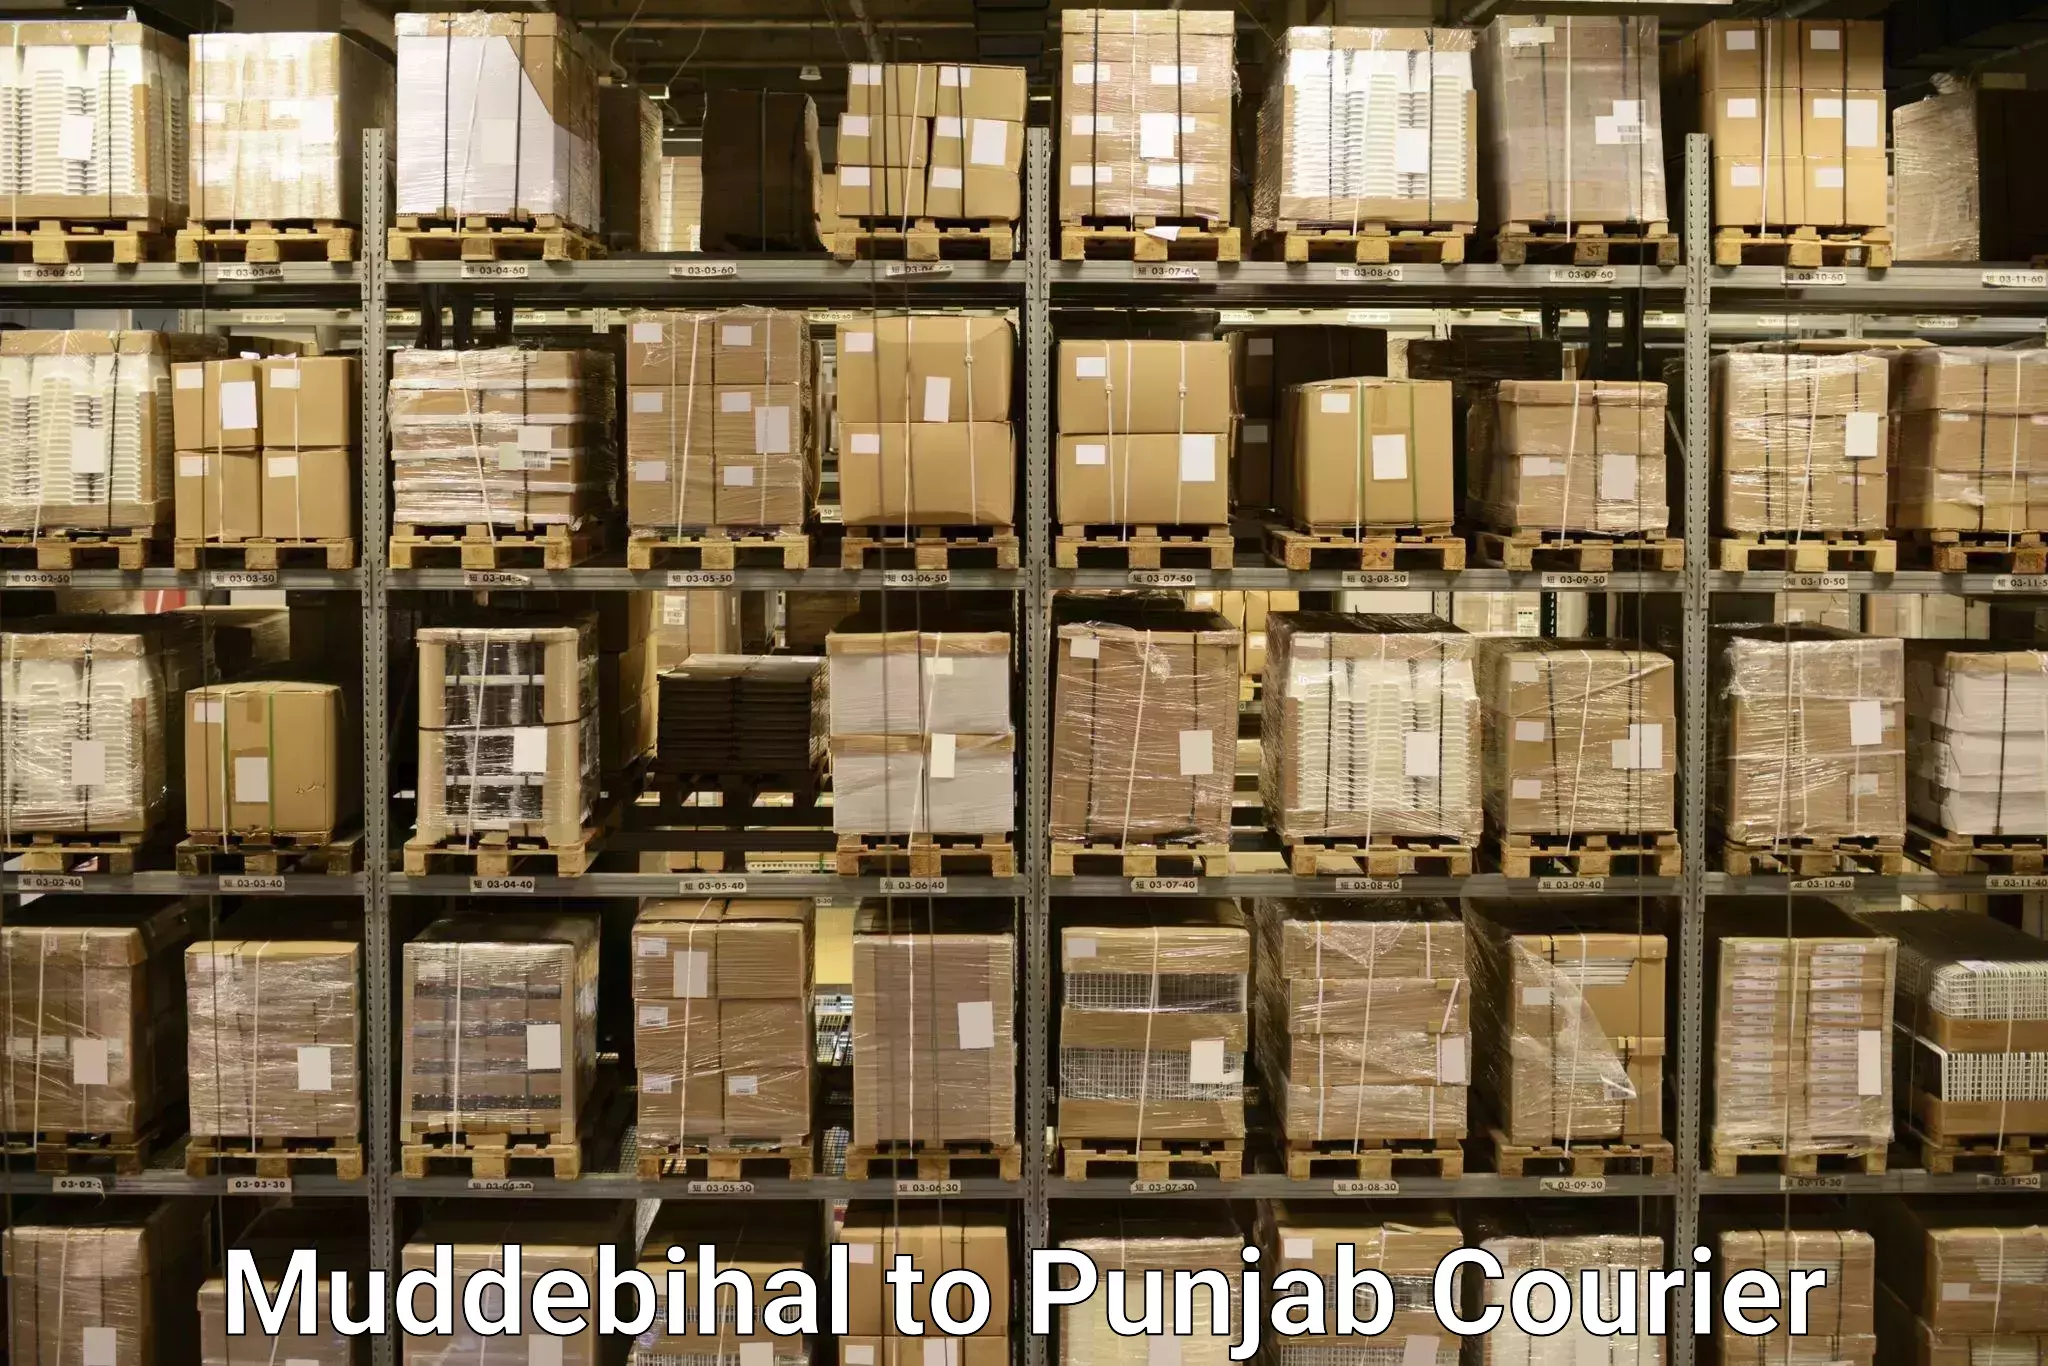 Baggage transport network Muddebihal to Ludhiana